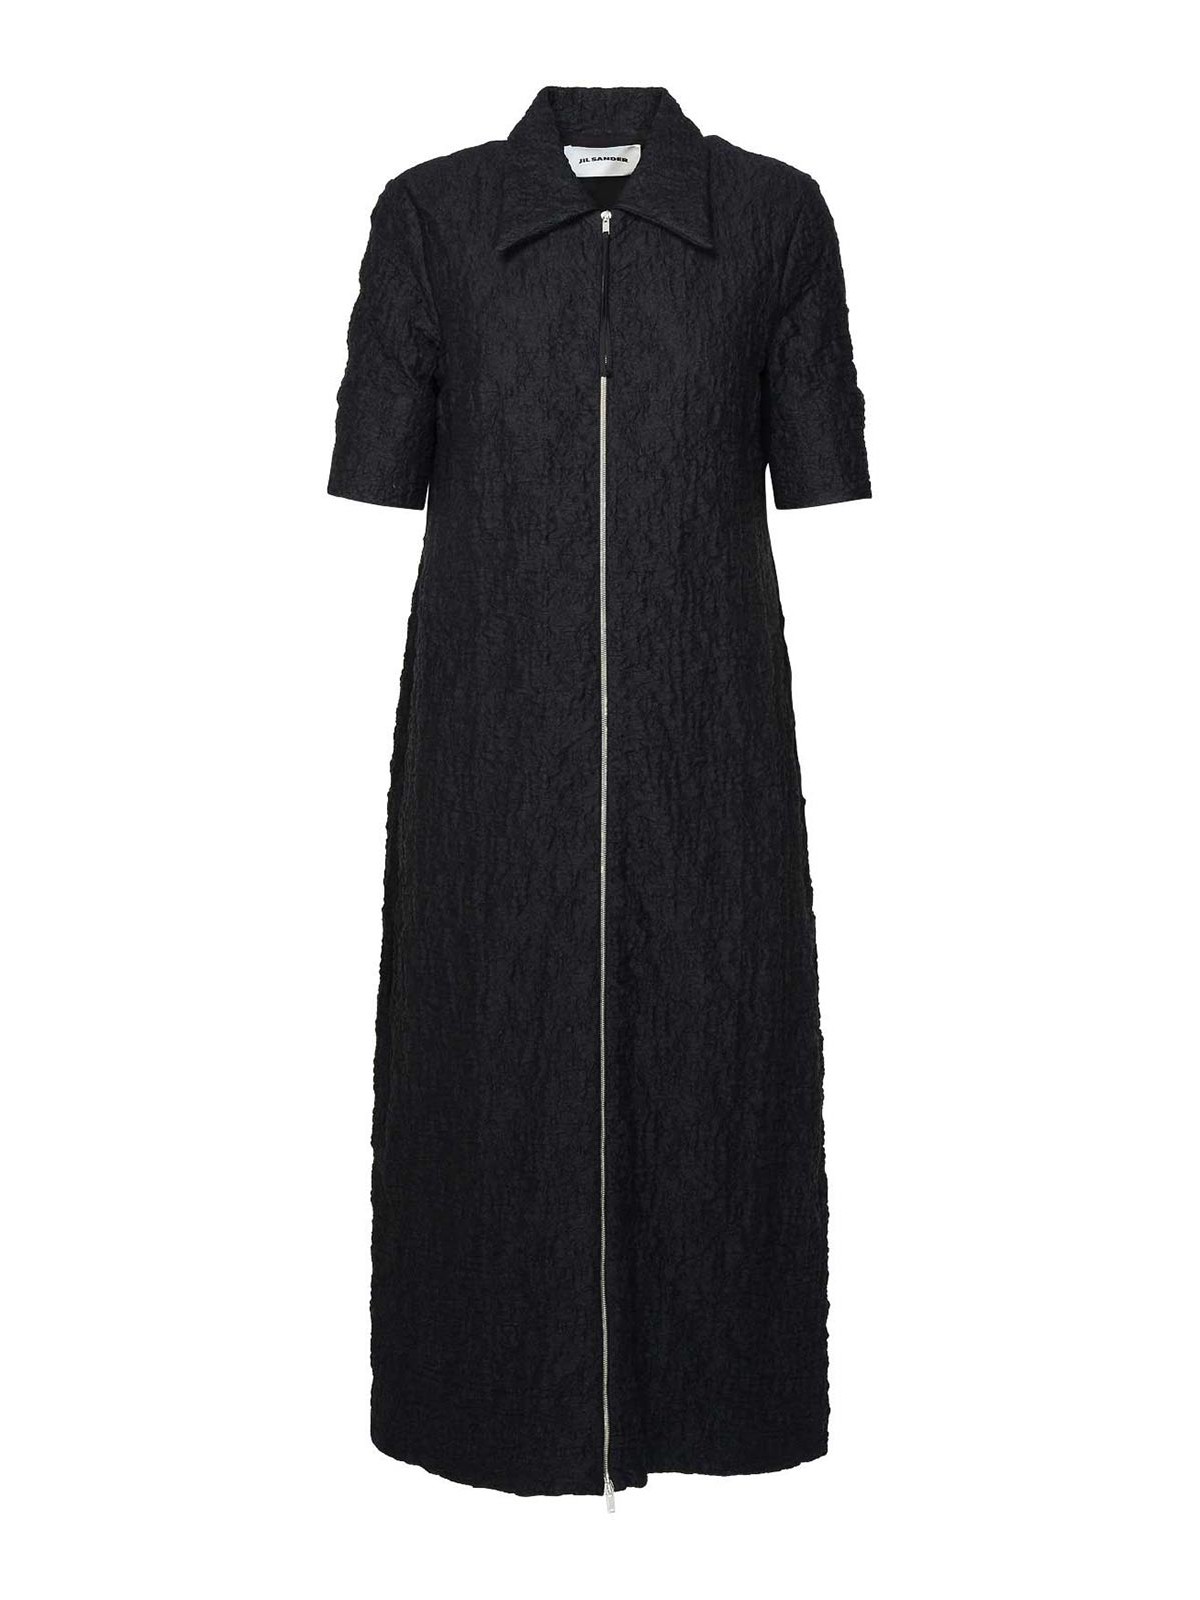 Shop Jil Sander Black Cotton Blend Dress